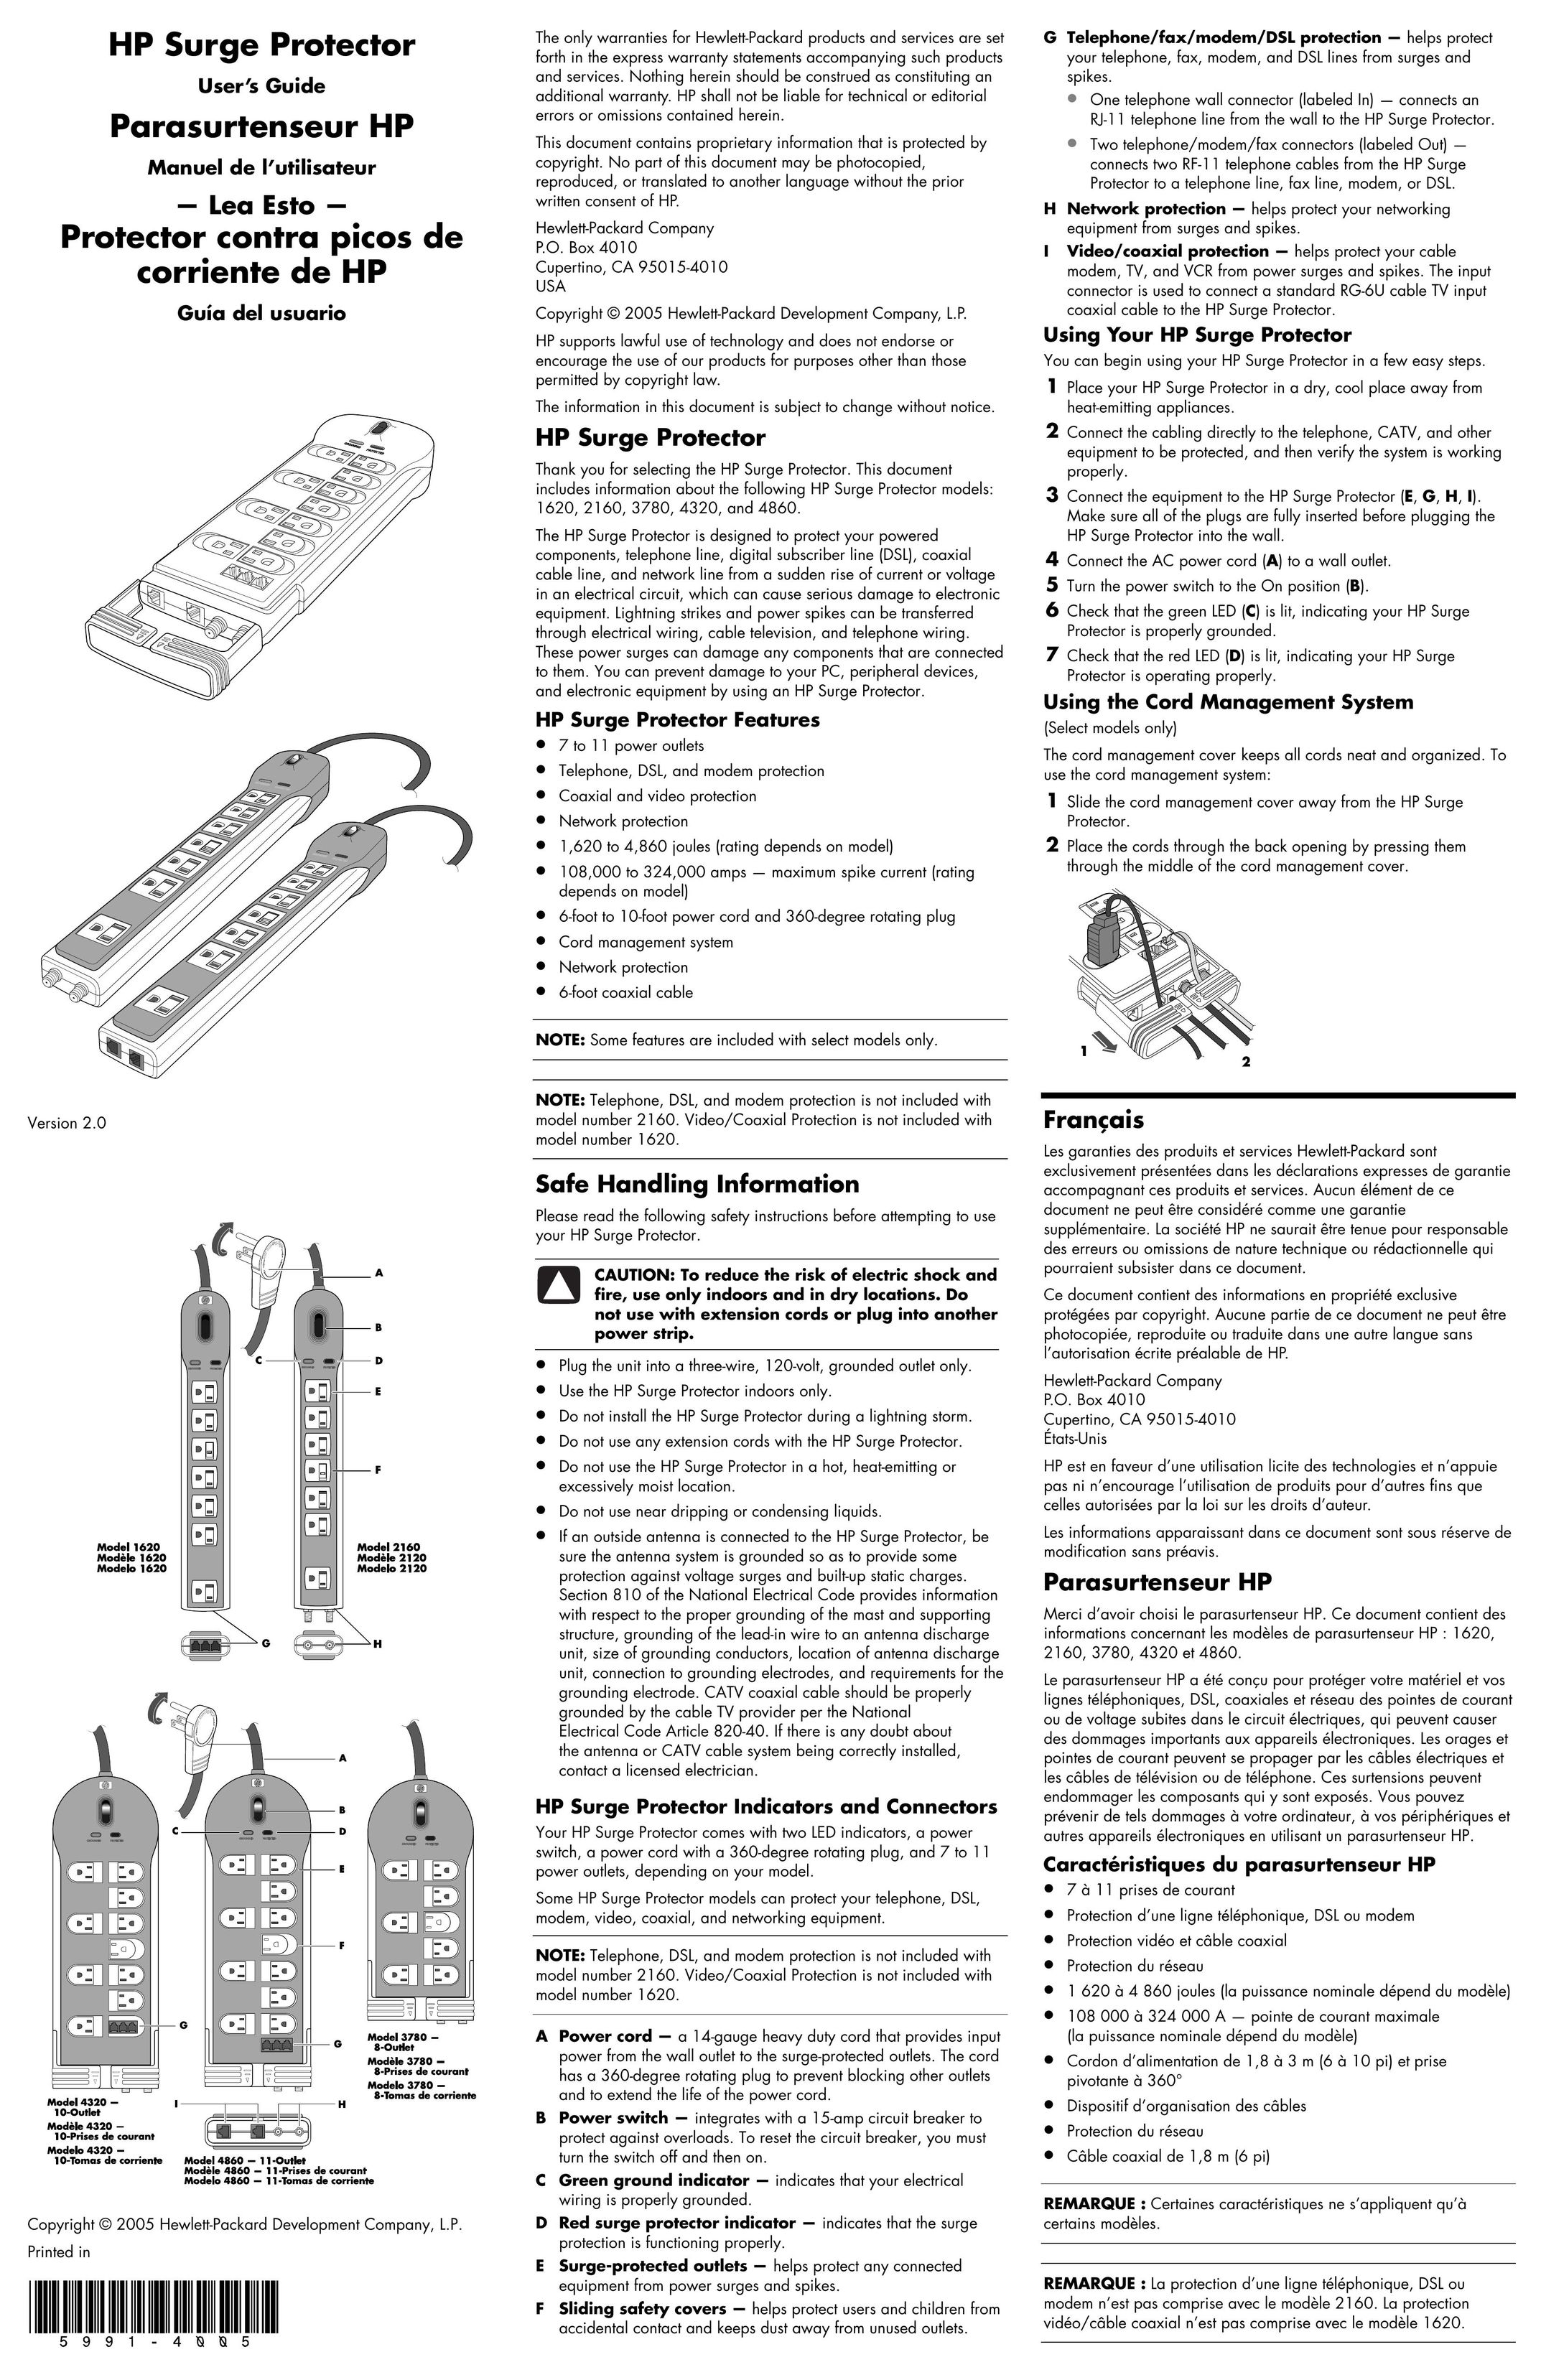 HP (Hewlett-Packard) 4860 Surge Protector User Manual